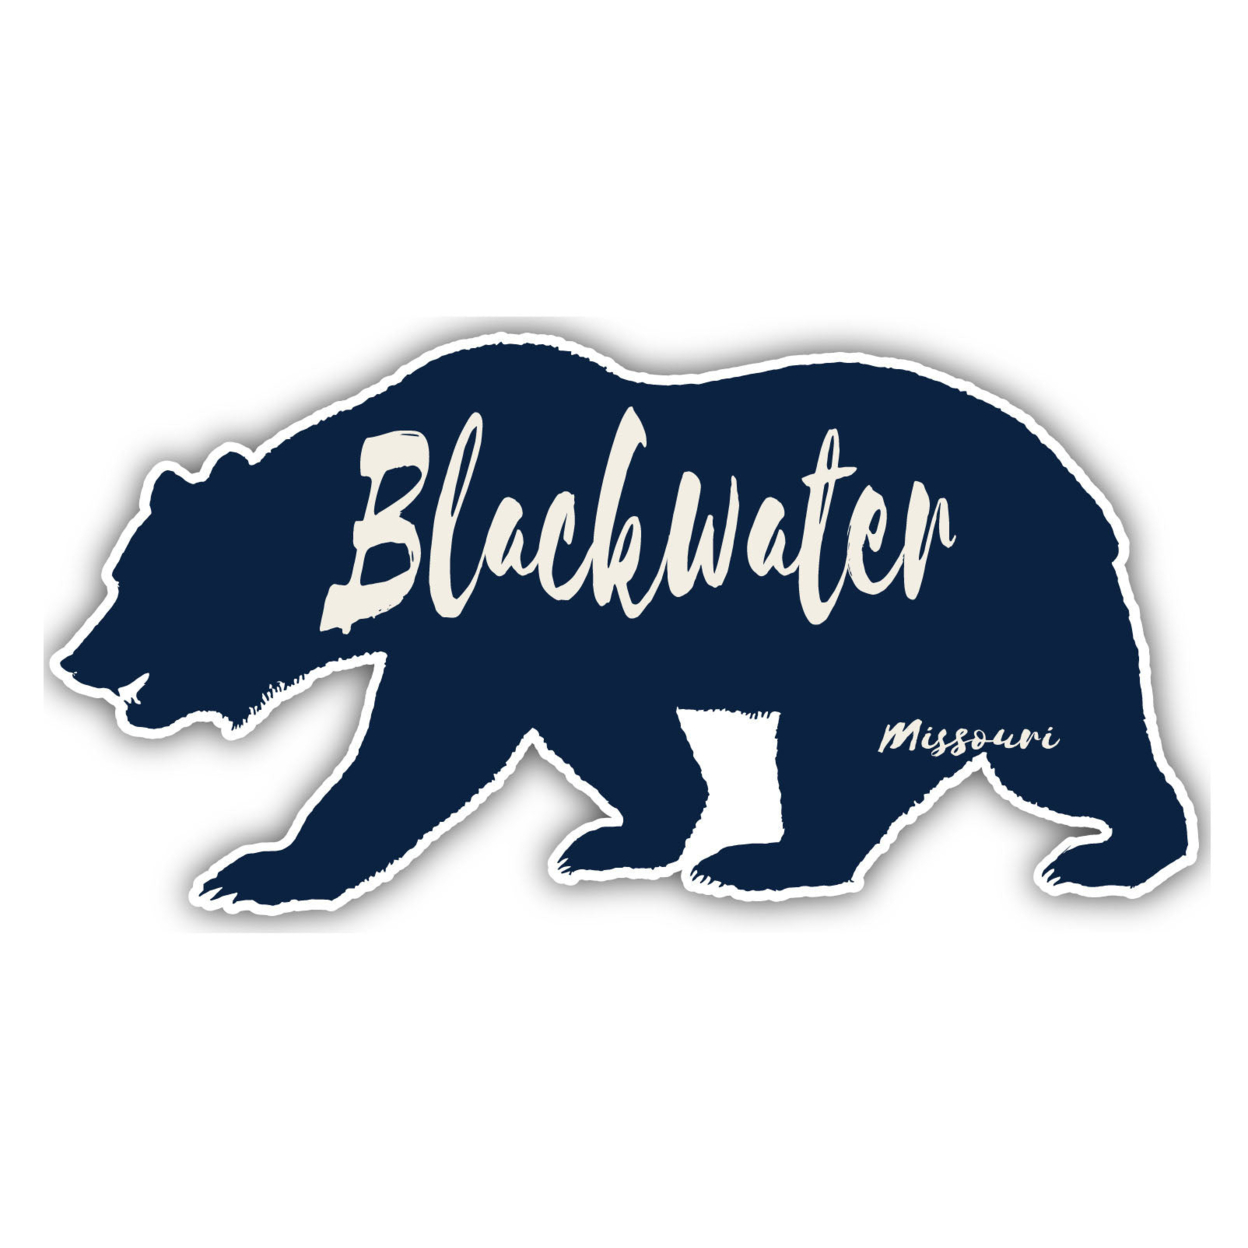 Blackwater Missouri Souvenir Decorative Stickers (Choose Theme And Size) - 4-Pack, 2-Inch, Bear